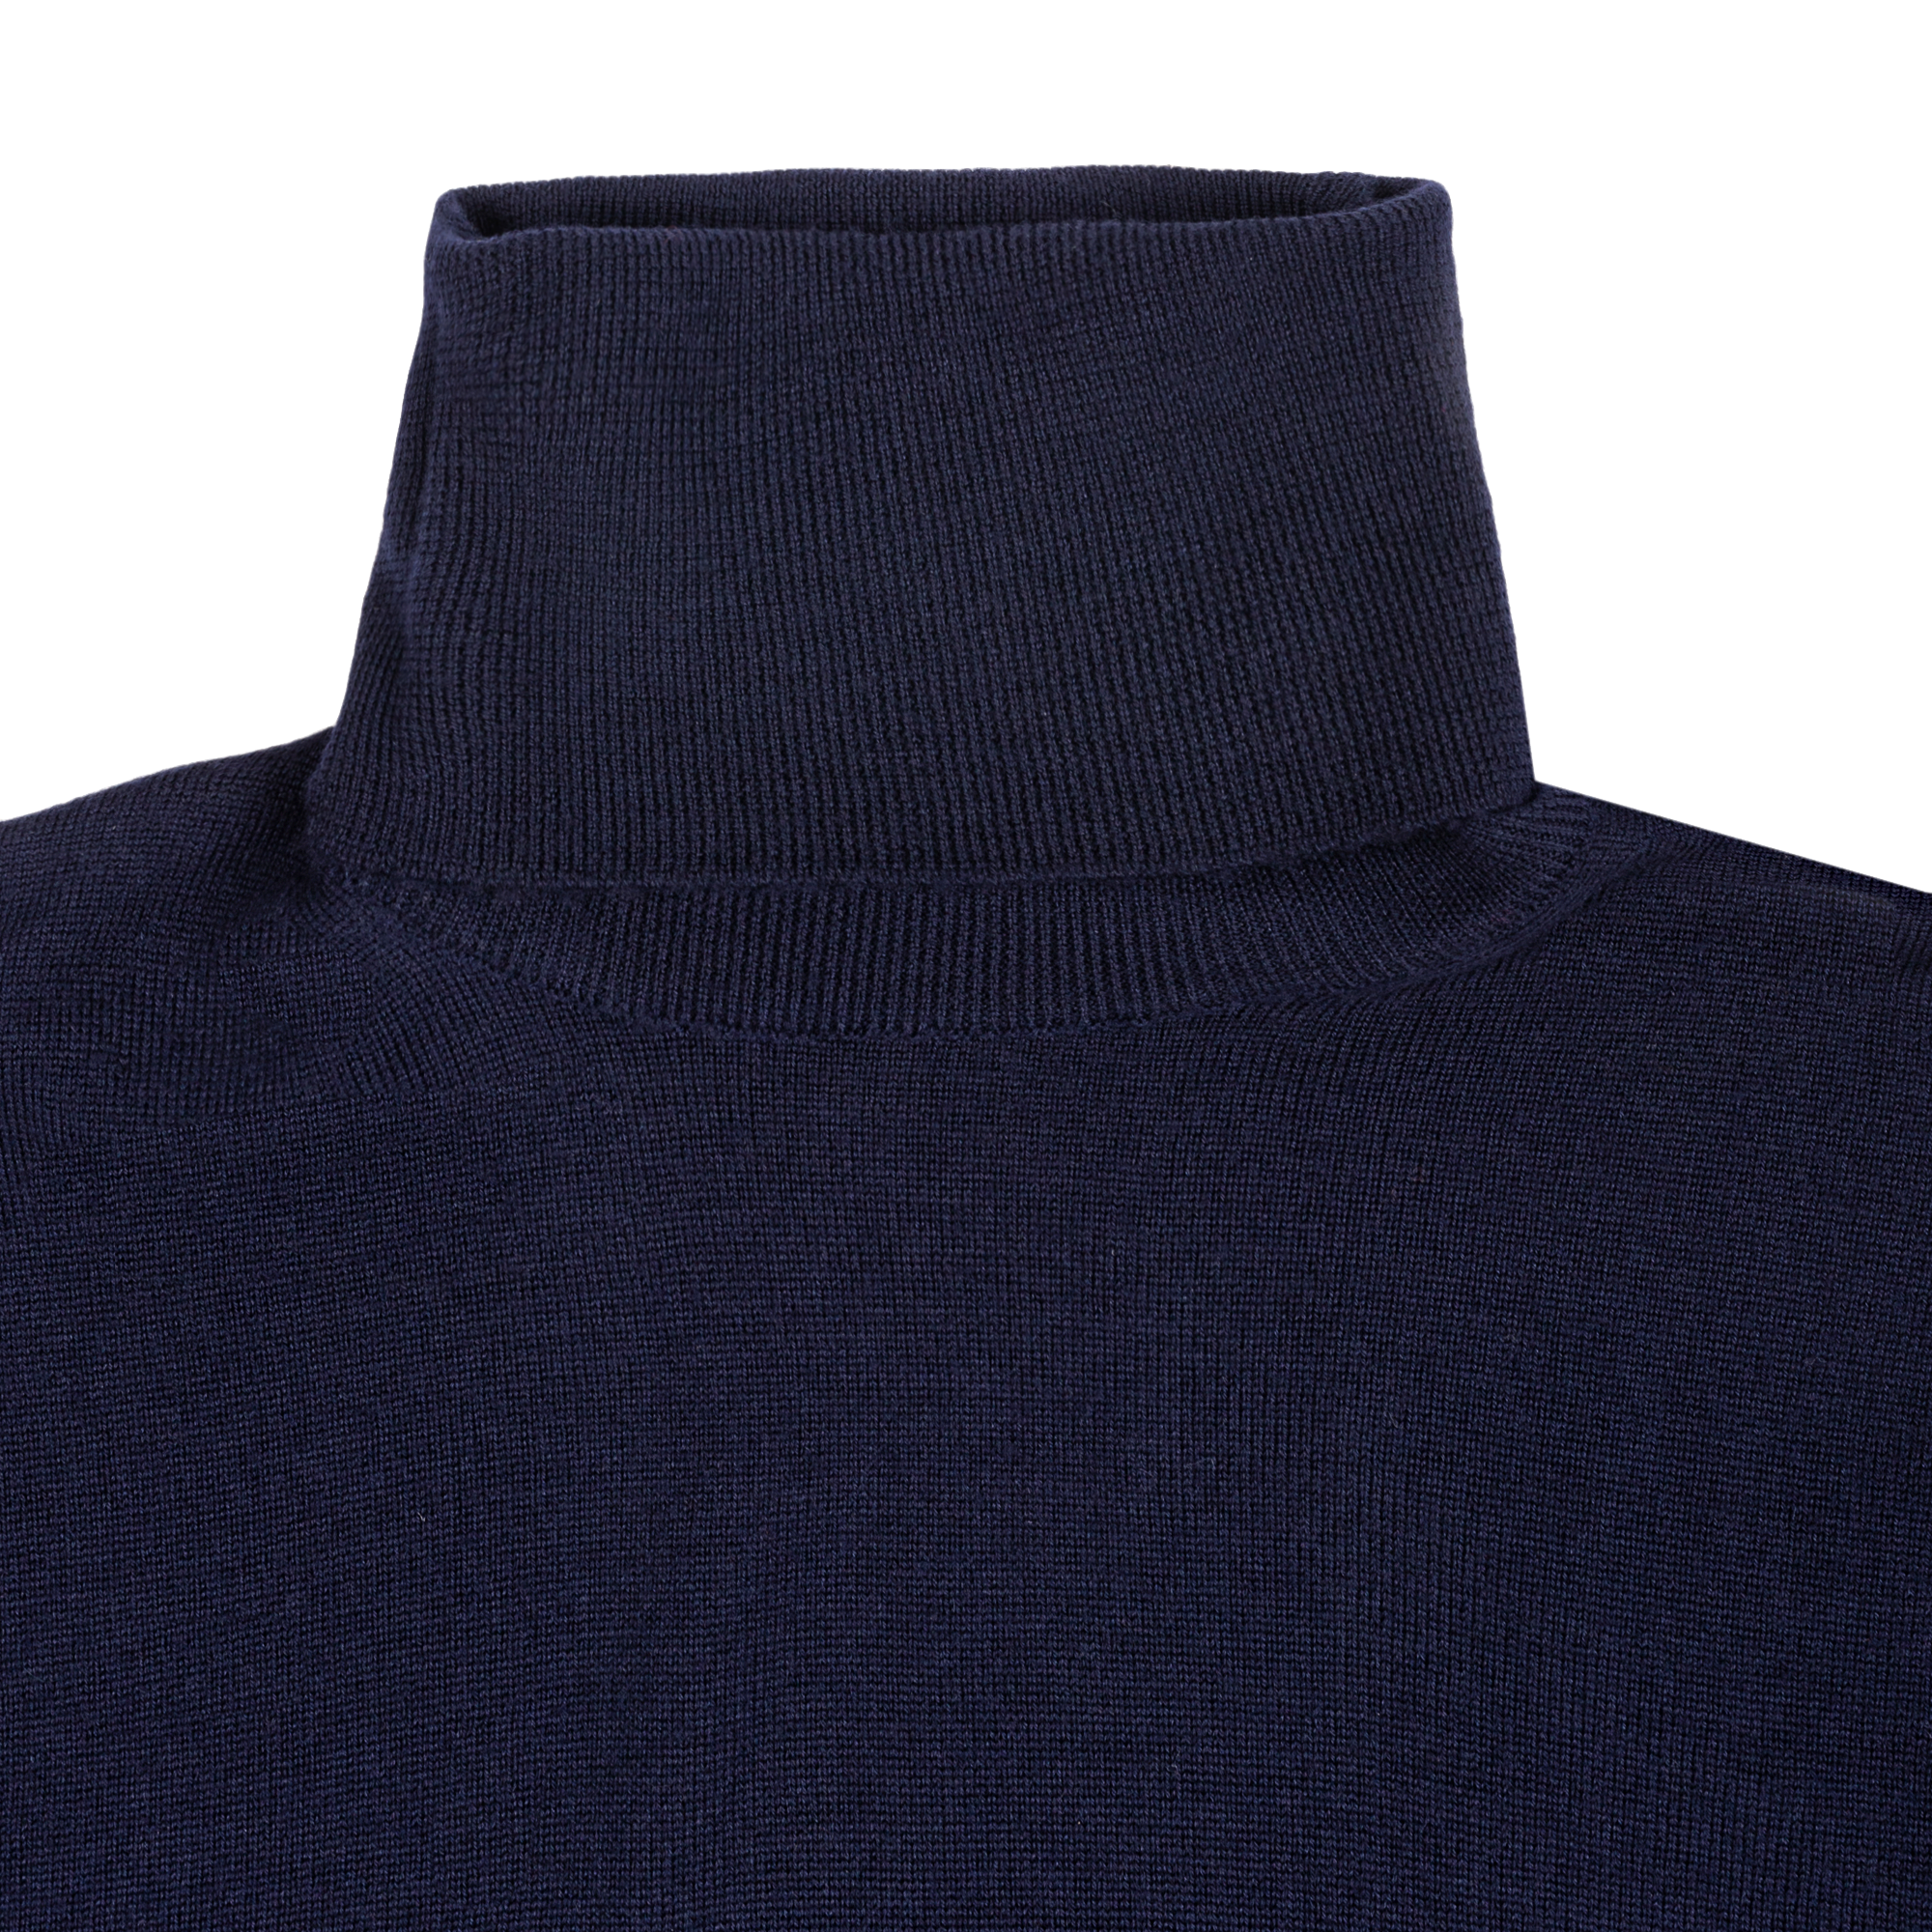 Men's Blue Turtleneck Sweater